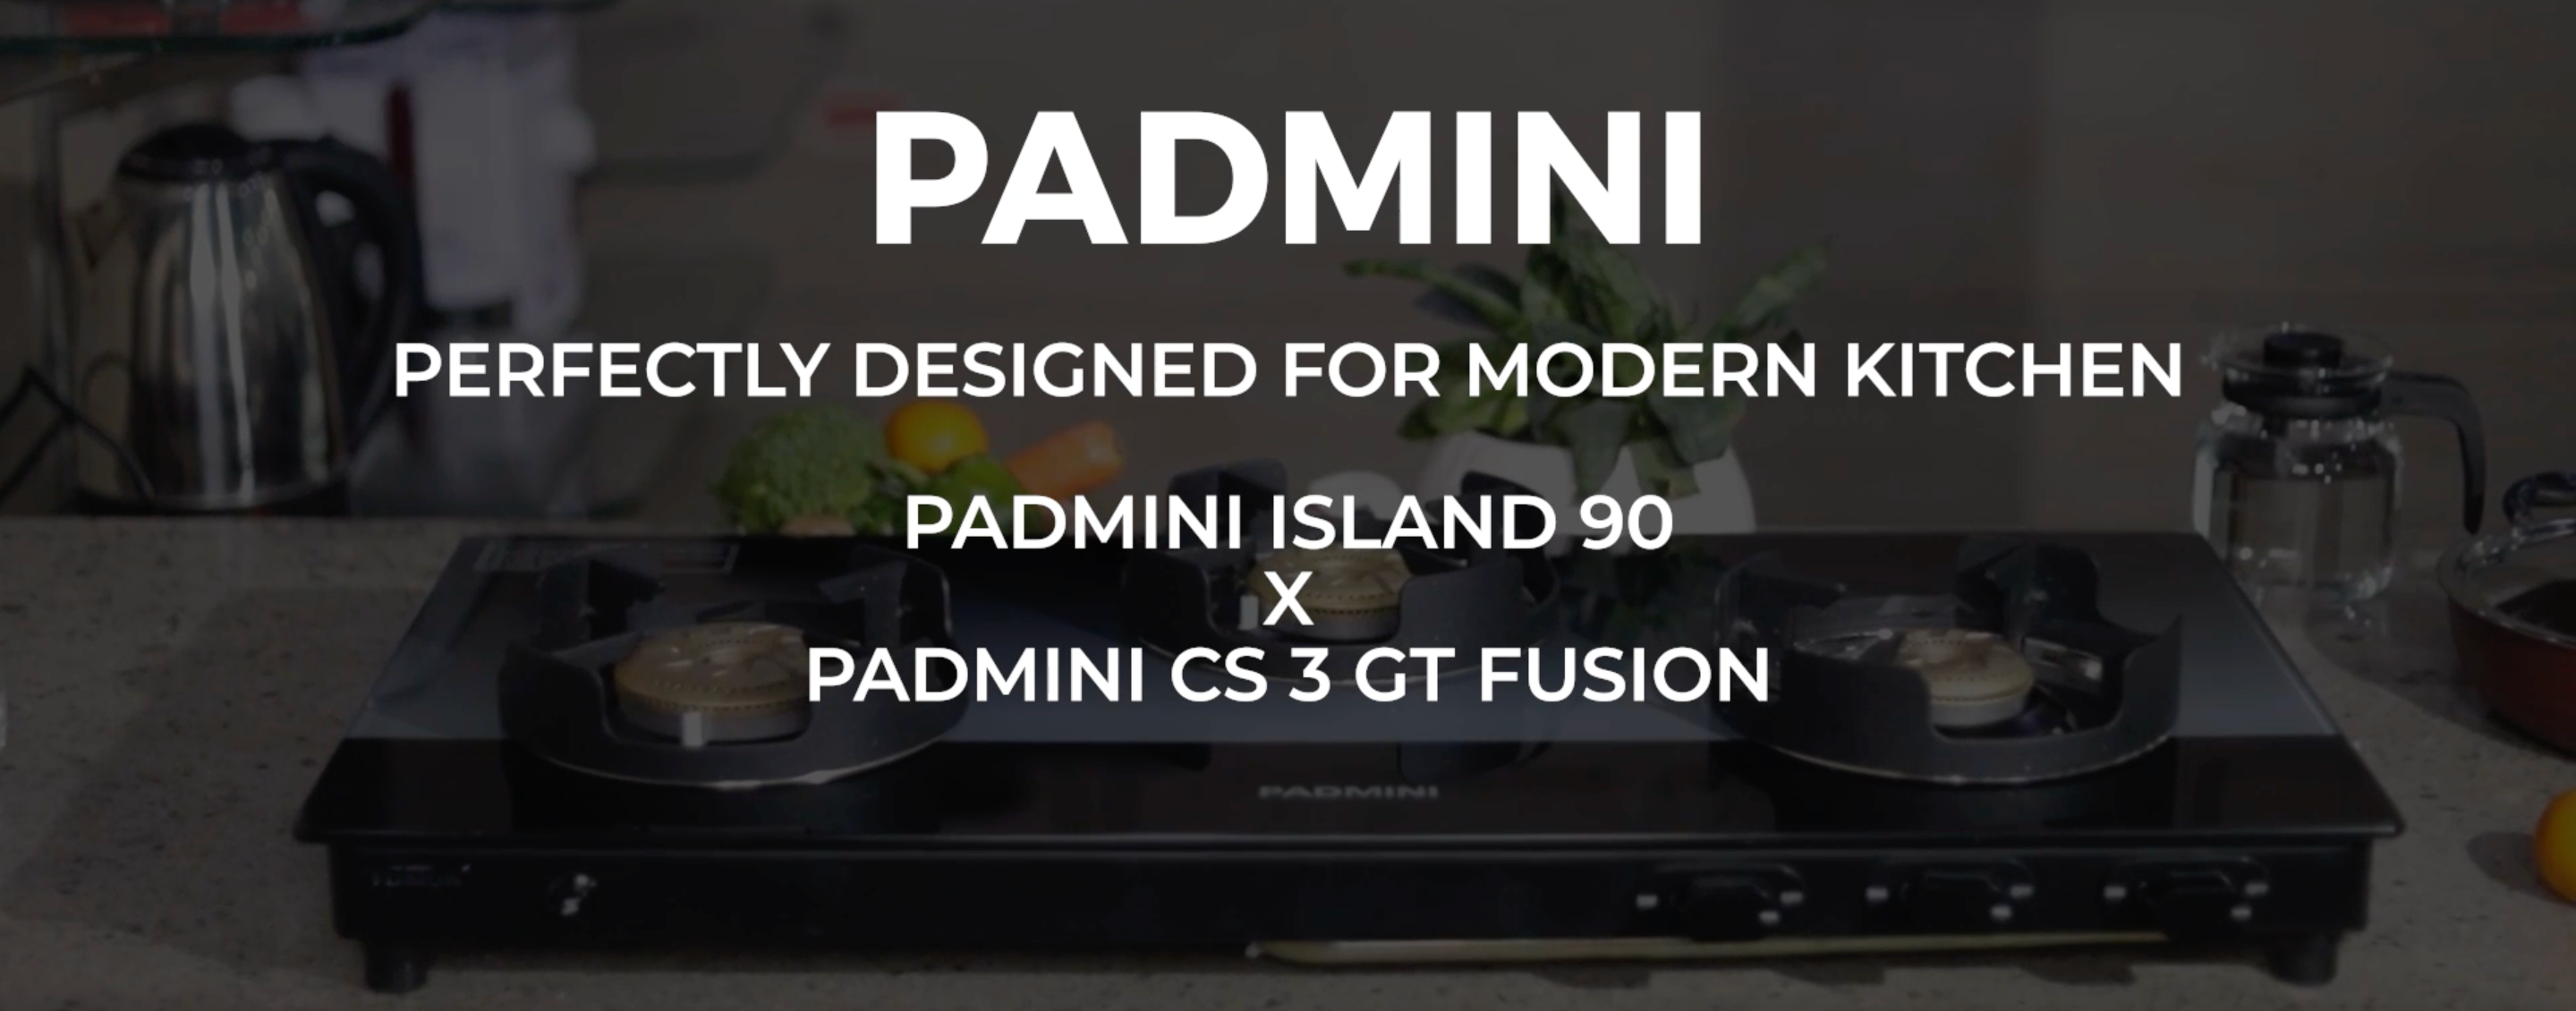 वीडियो लोड करें: Island 90 Chimney - 3GT Fusion Cooktop